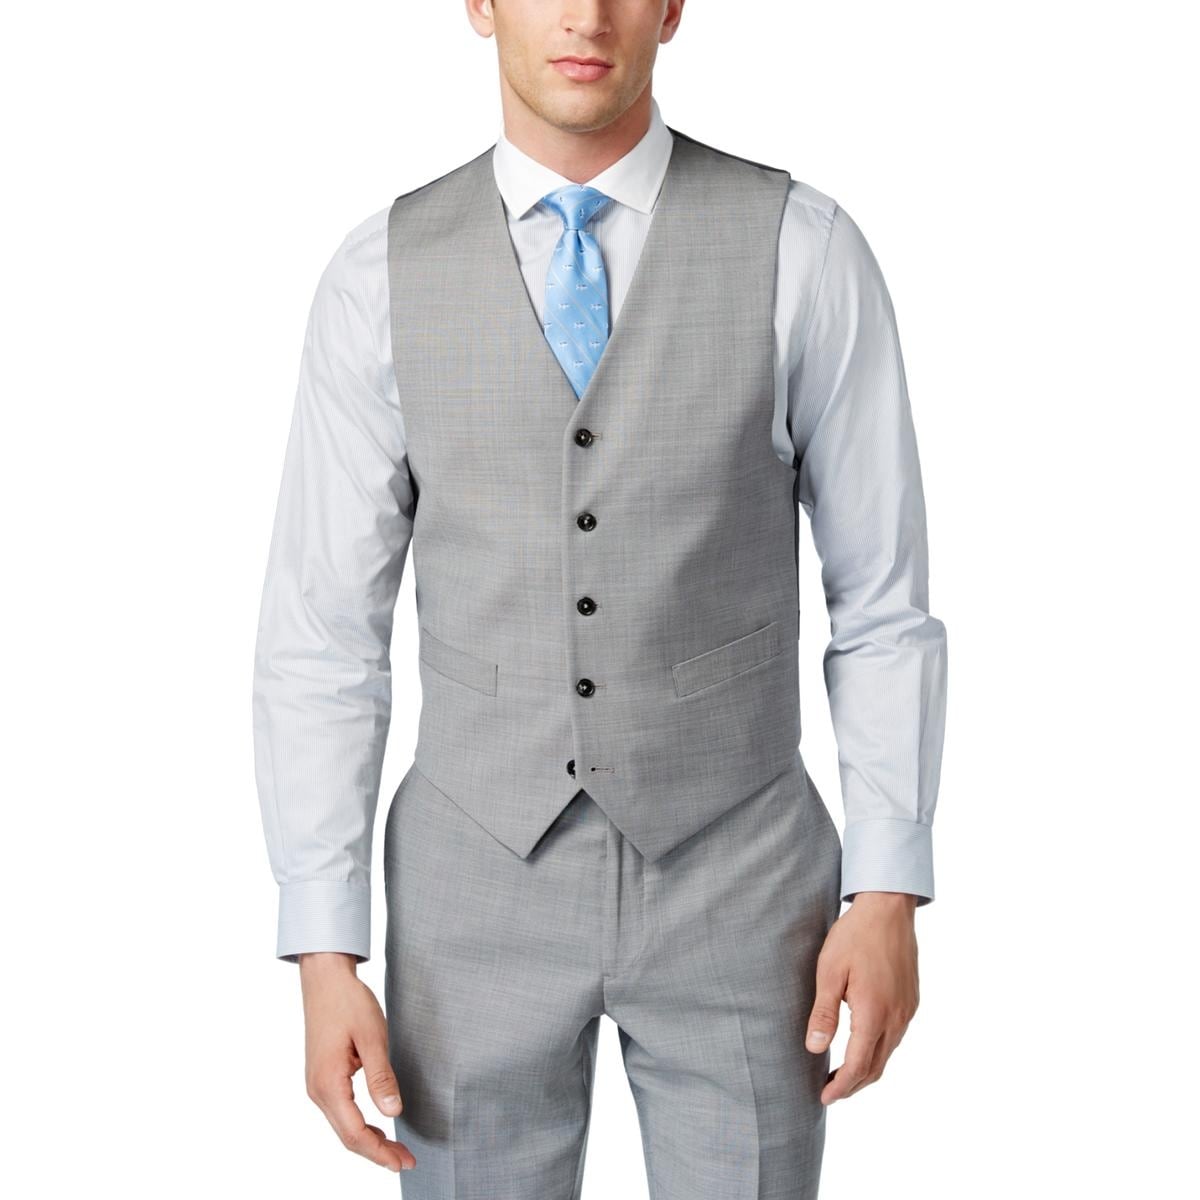 tommy hilfiger modern fit suit